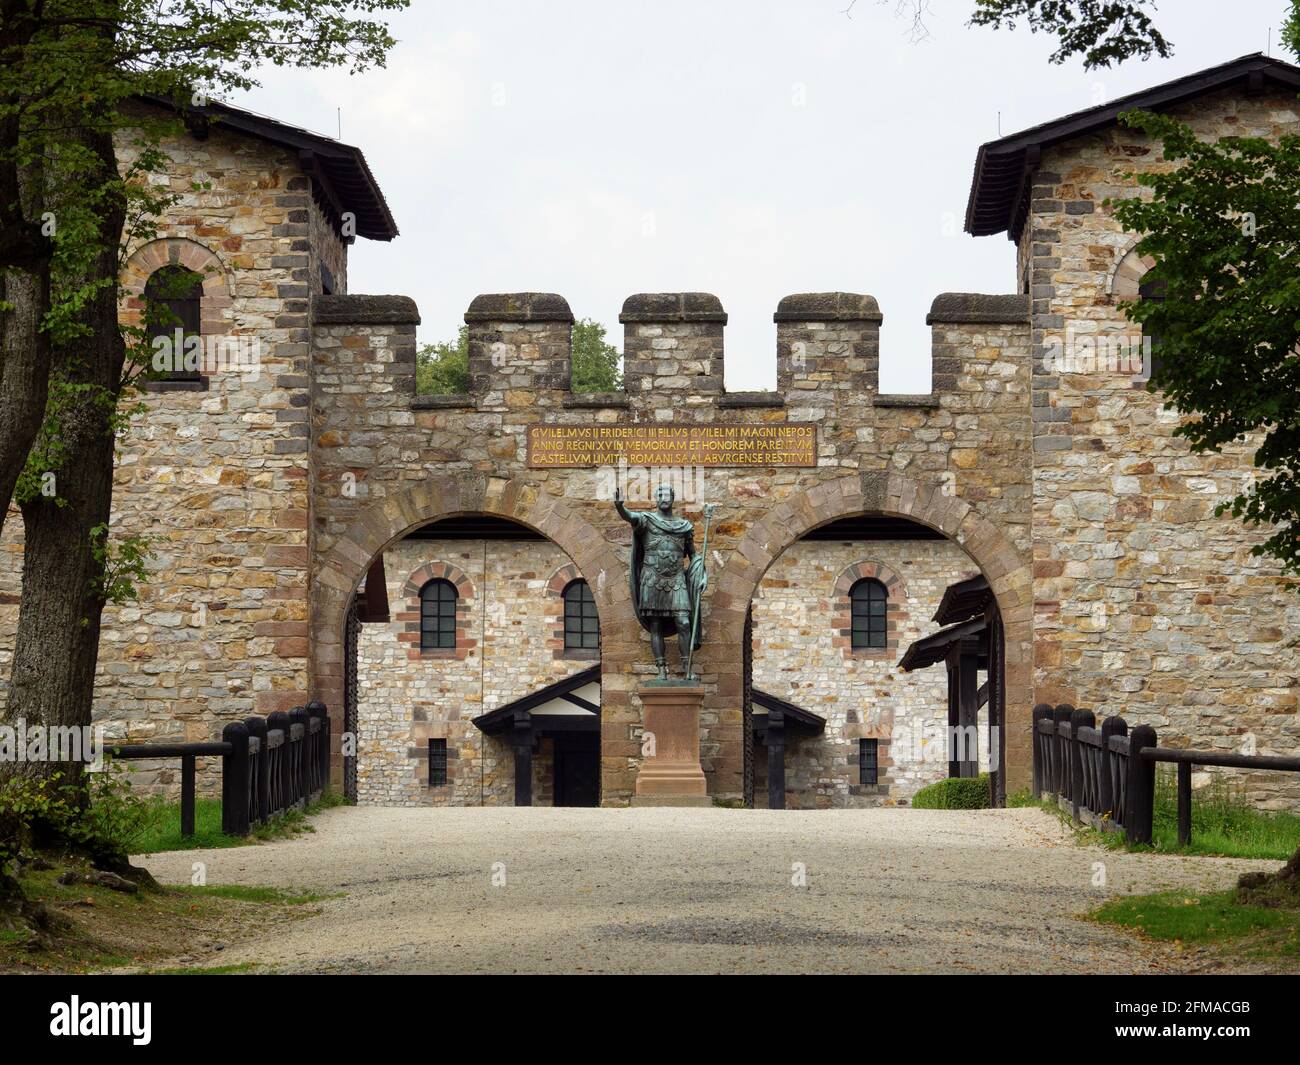 Statue Antonius Pius, Saalburg Römische Festung bei Bad Homburg, Hauptportal, Roman Limes, UNESCO-Weltkulturerbe, Taunus, Hessen, Deutschland Stockfoto